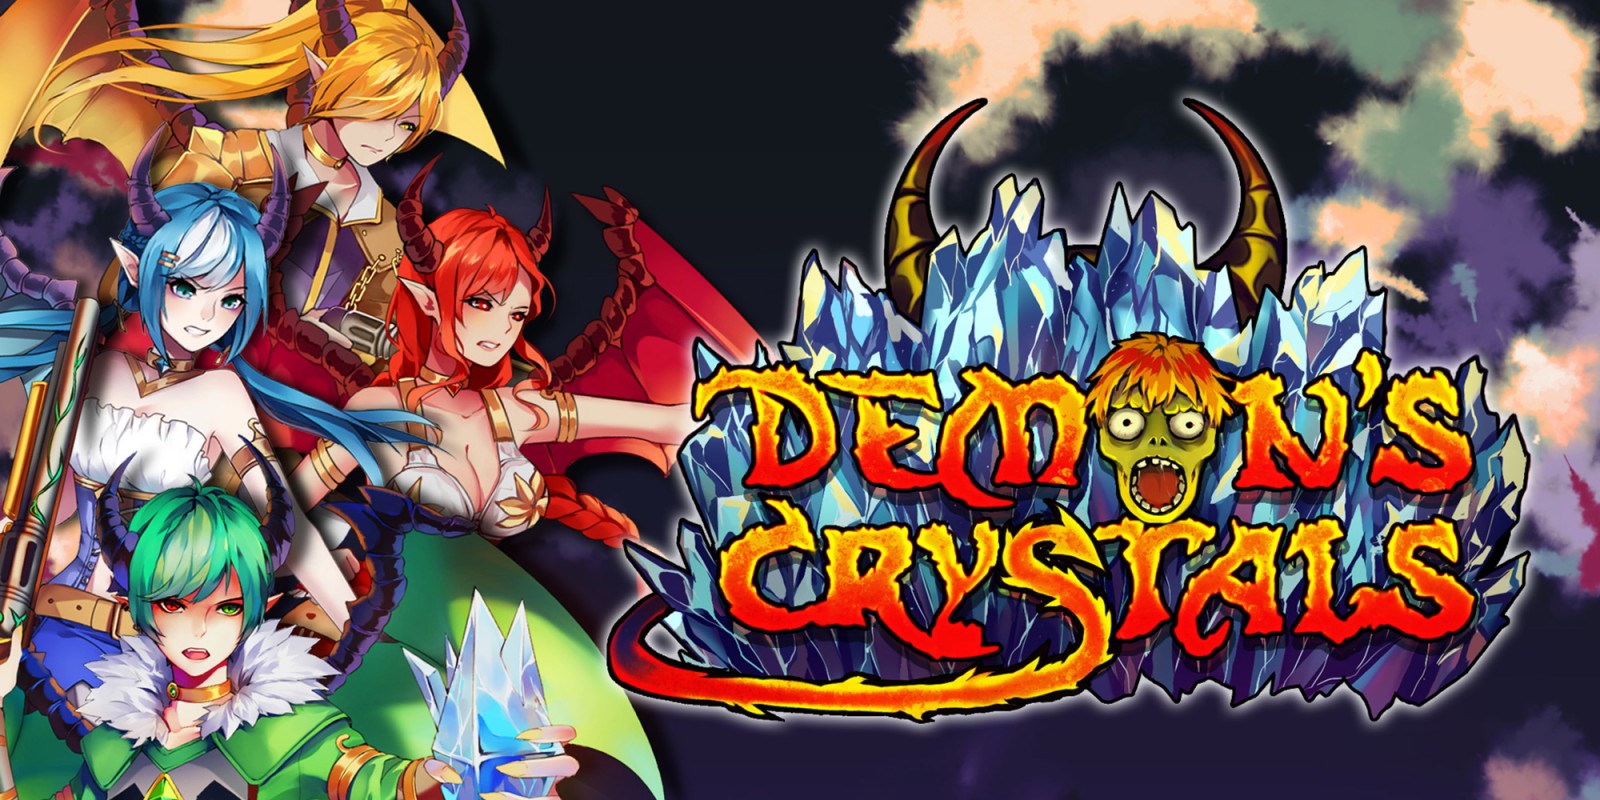 Demon's Crystals